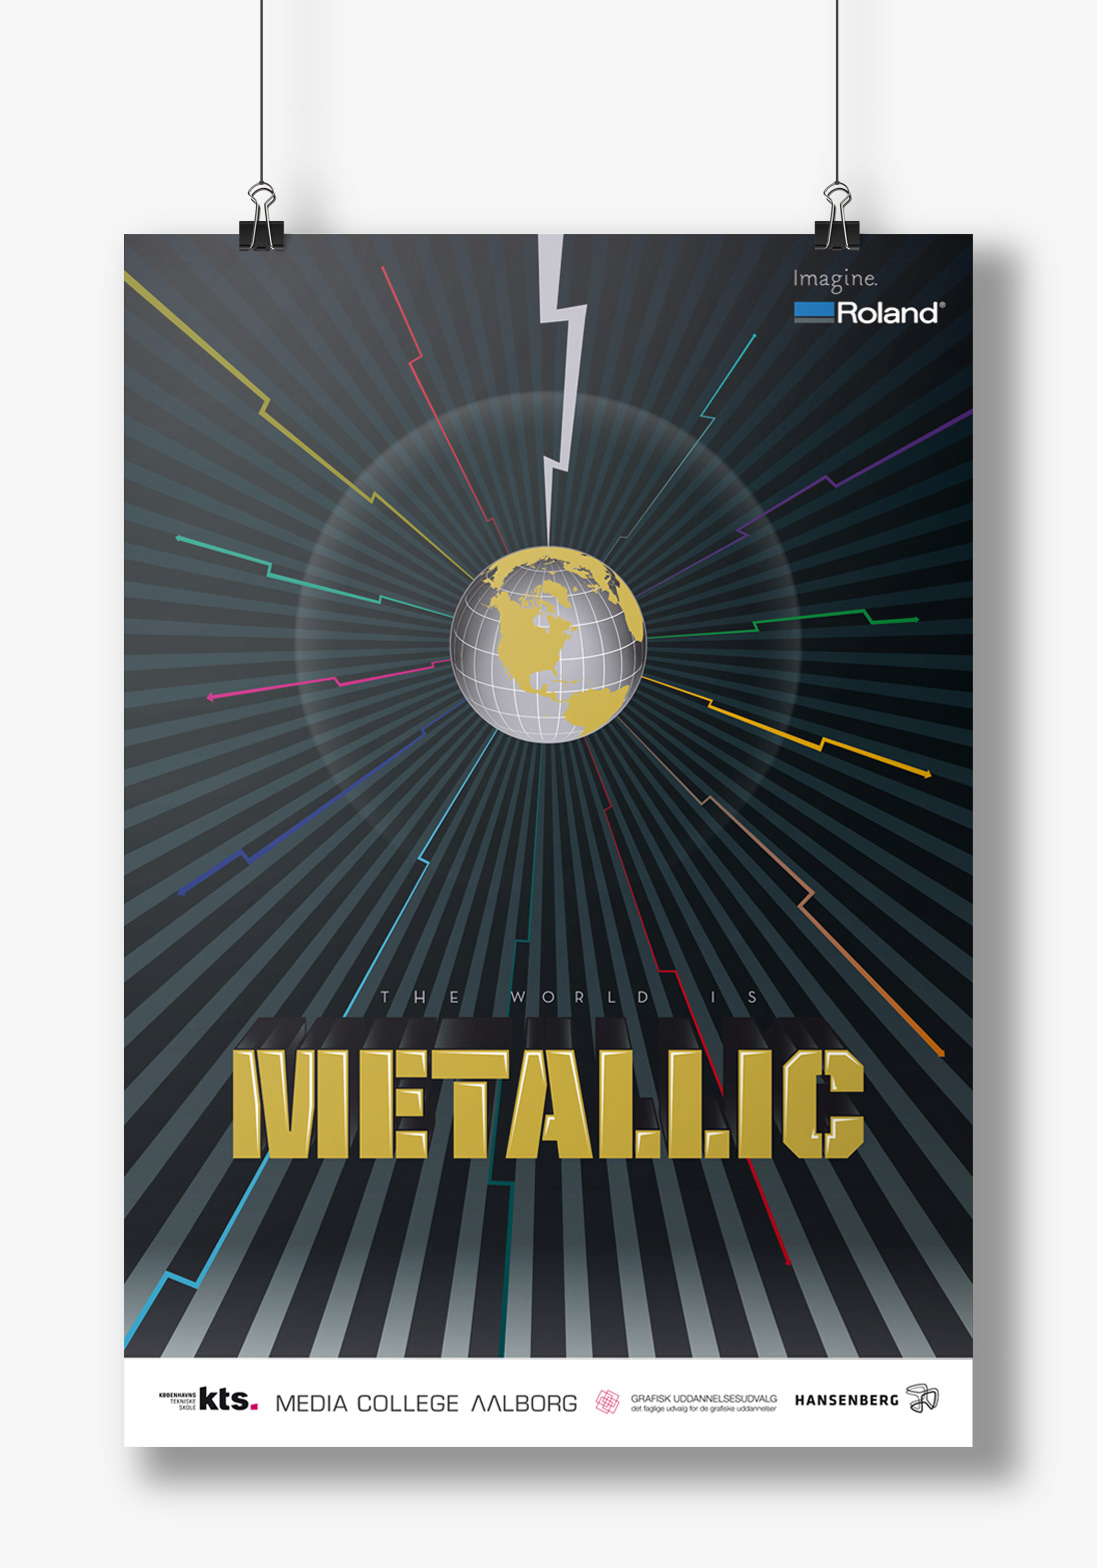 The World Is Metallic silver gold VS-640 DM i SKILLS metallic color Poster Design